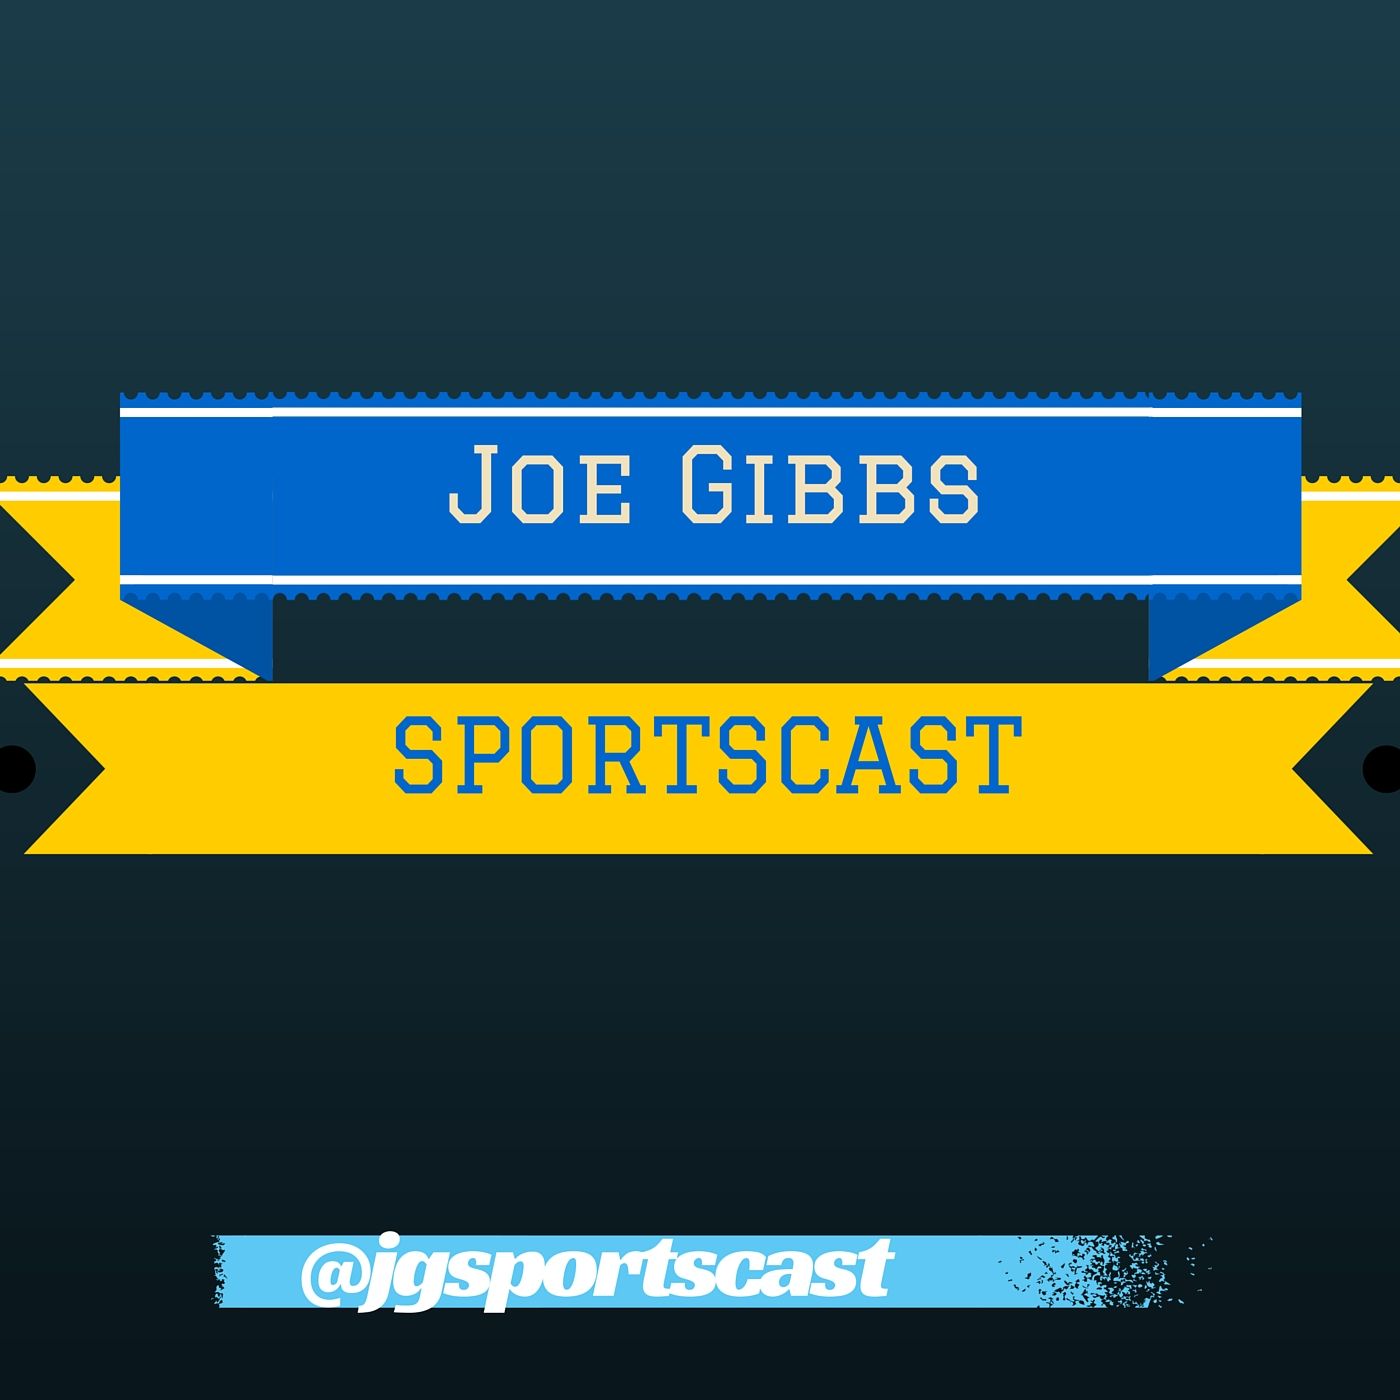 Joe Gibbs Sportscast